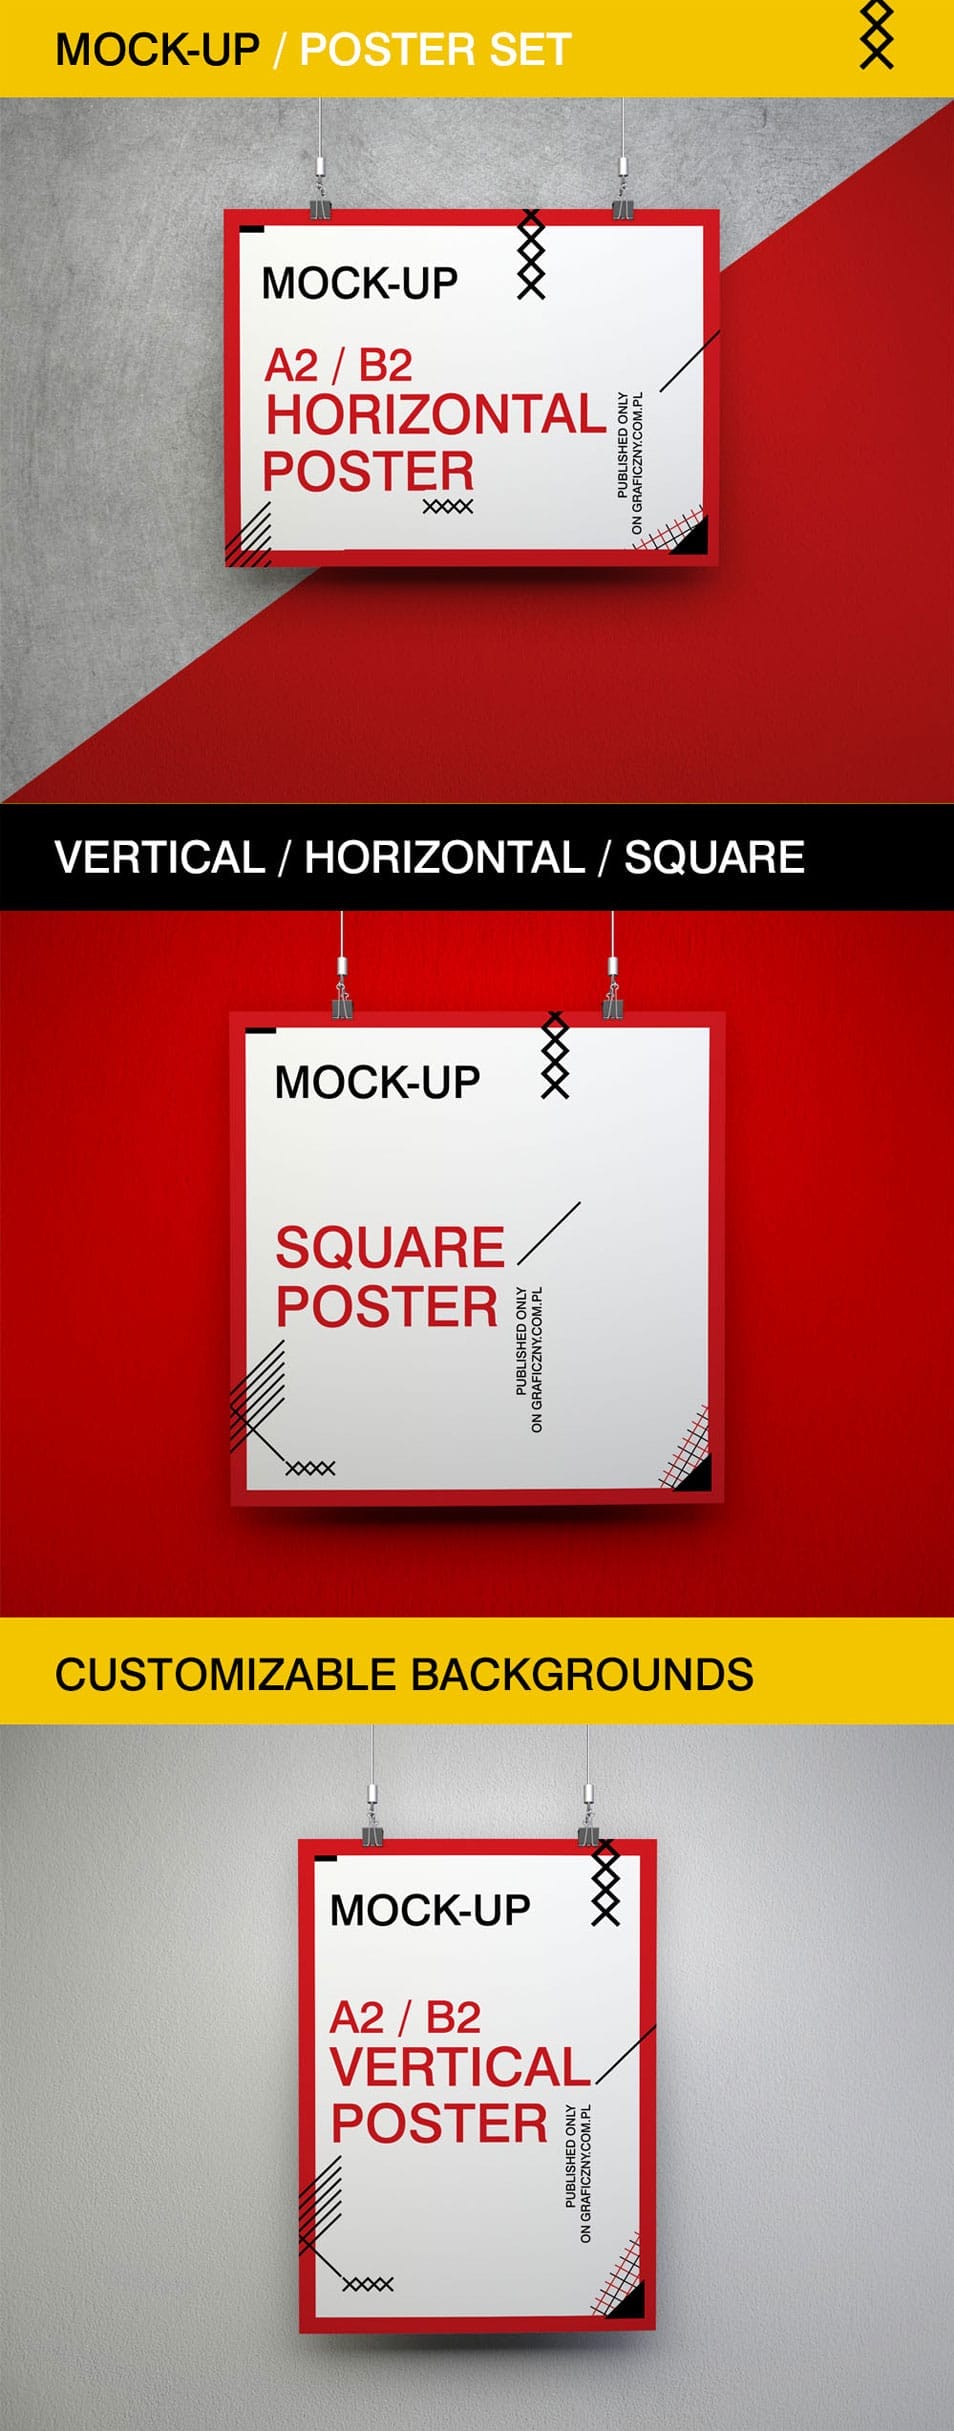 Vertical / Horizontal / Square Post Mockup Set